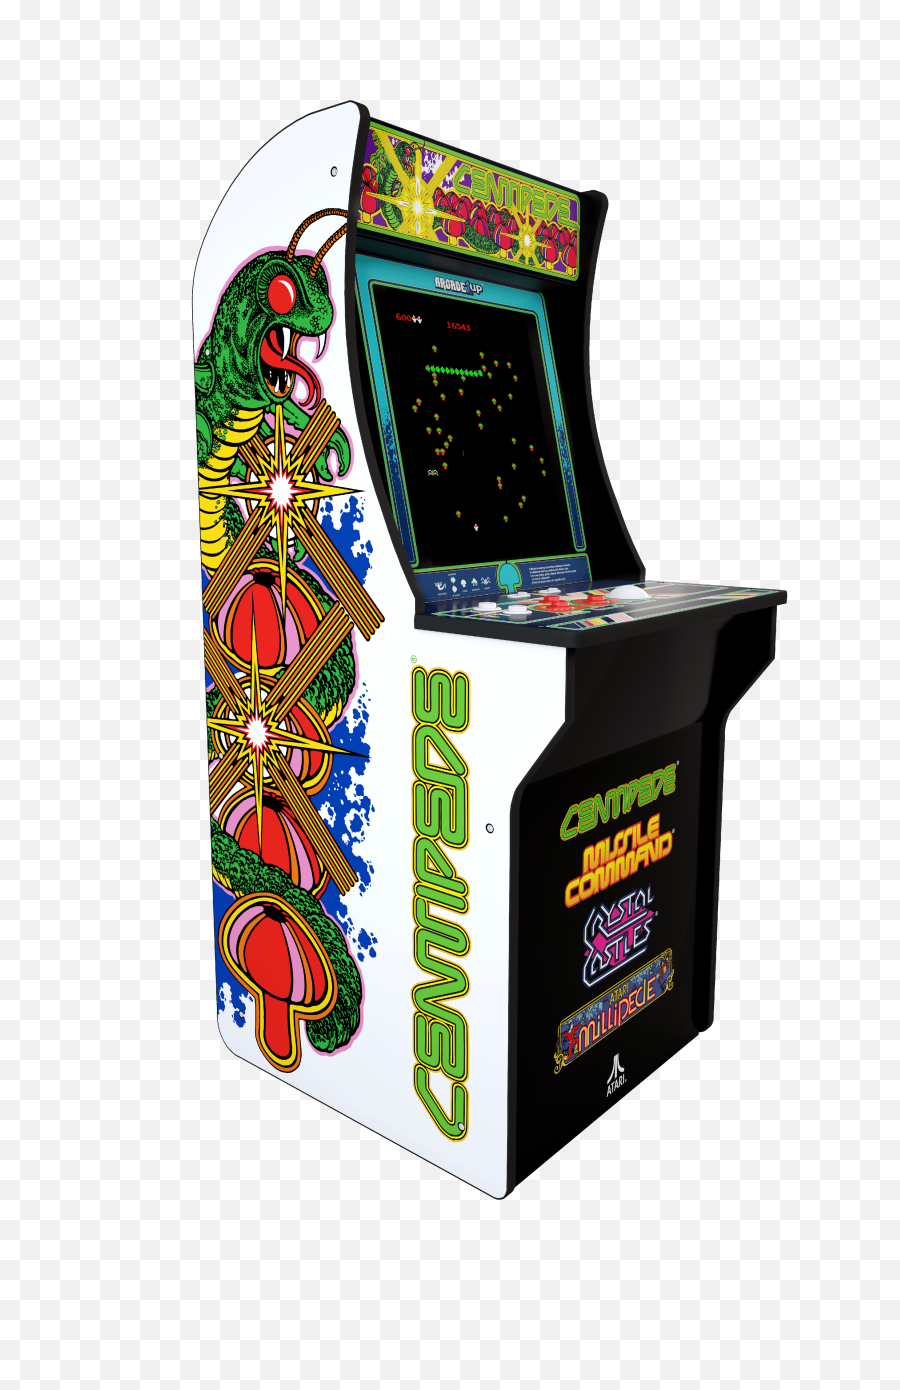 Centipede Arcade Machine Arcade1up 4ft U2013 Brickseek - Arcade 1up Centipede Png,Arcade Cabinet Png